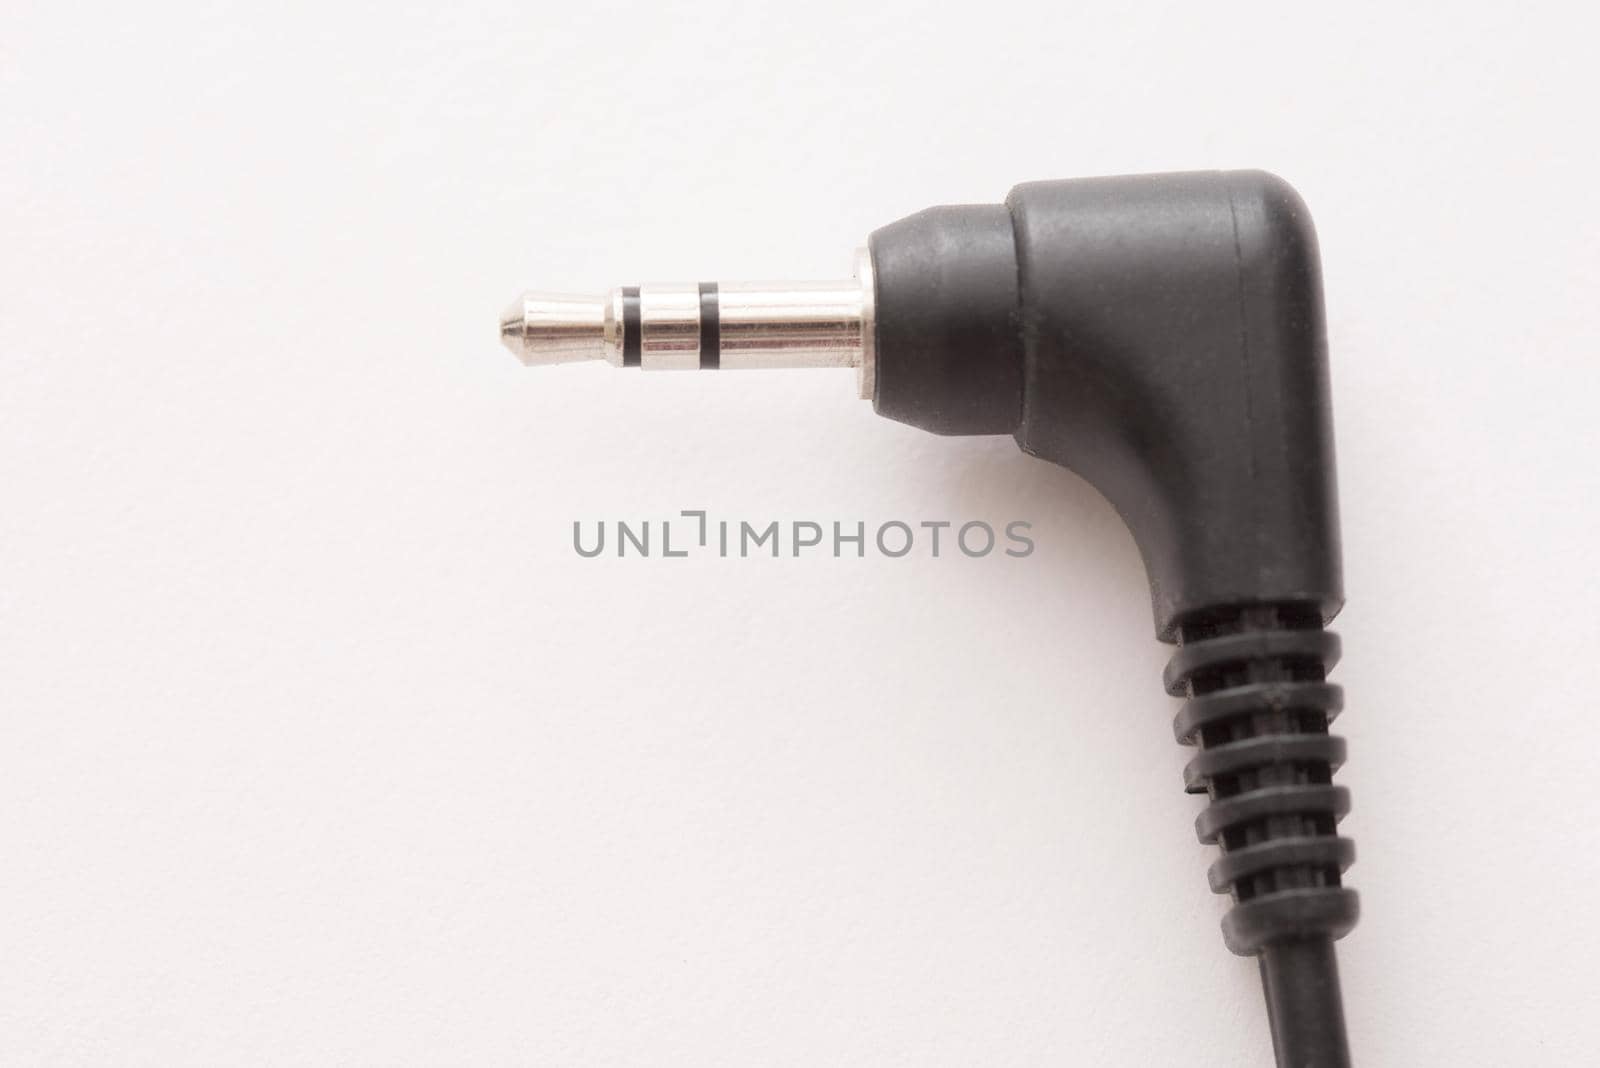 Simple black plastic stereo jack audio plug close-up on white background